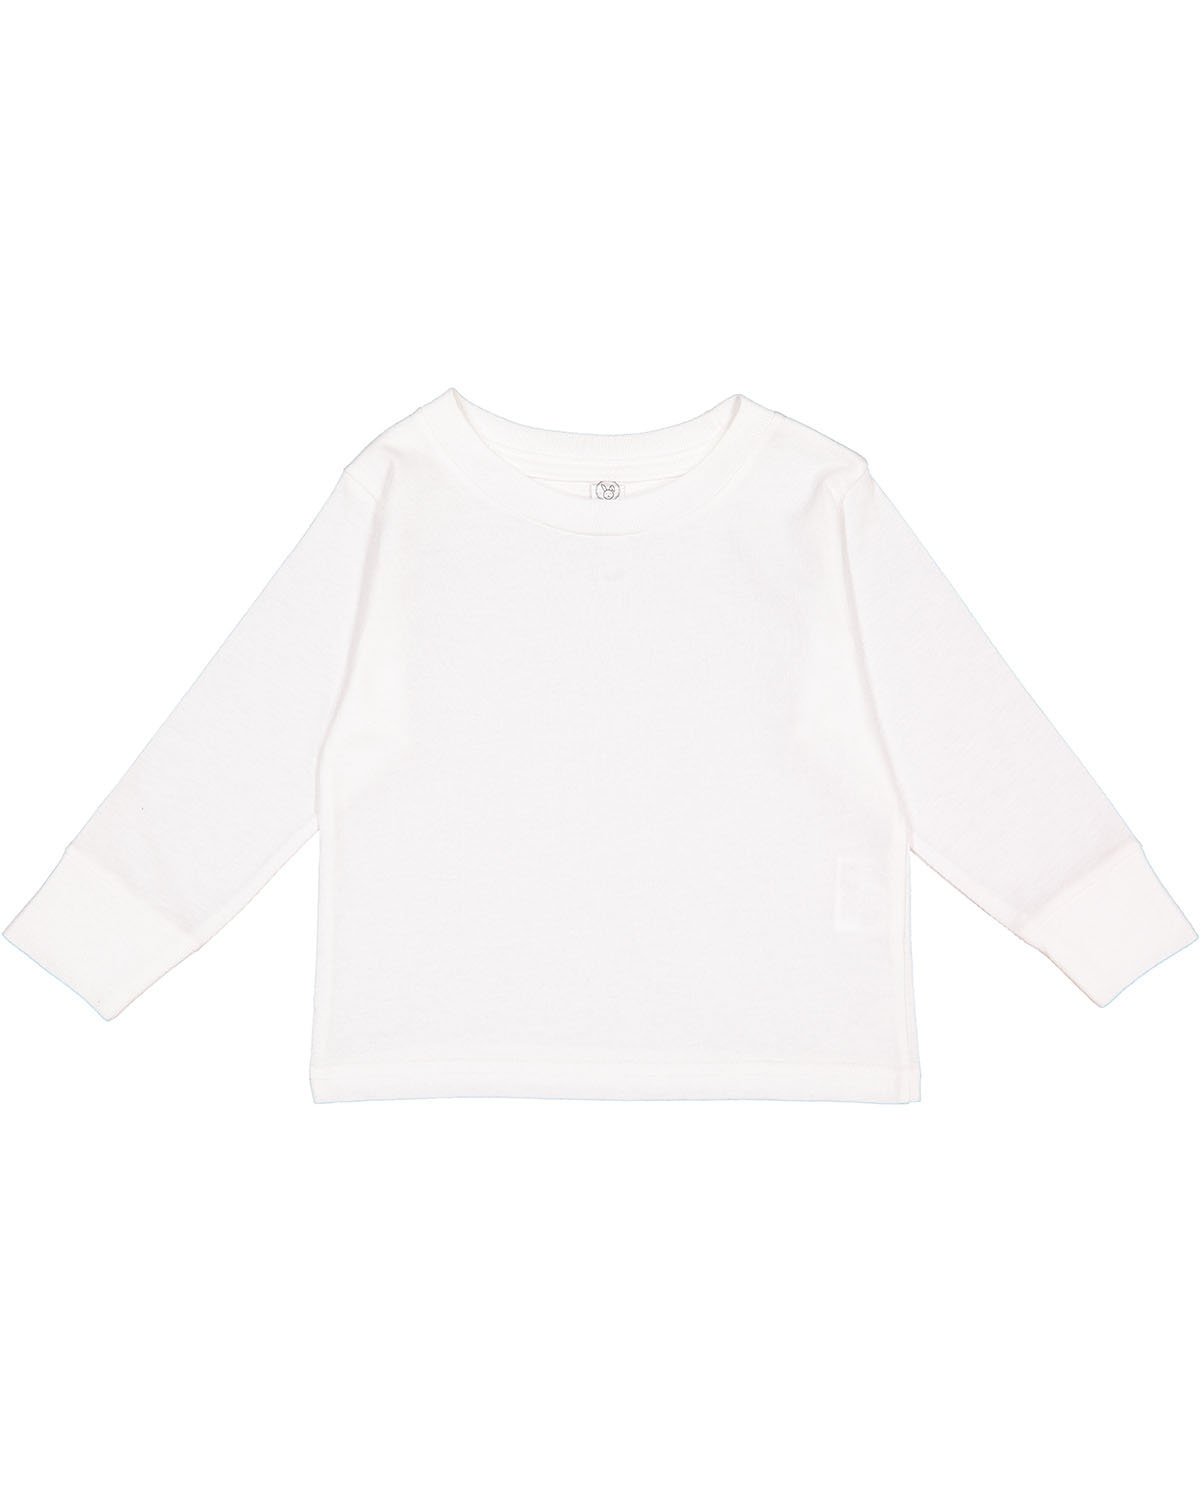 Rabbit Skins Toddler Long-Sleeve T-Shirt WHITE 